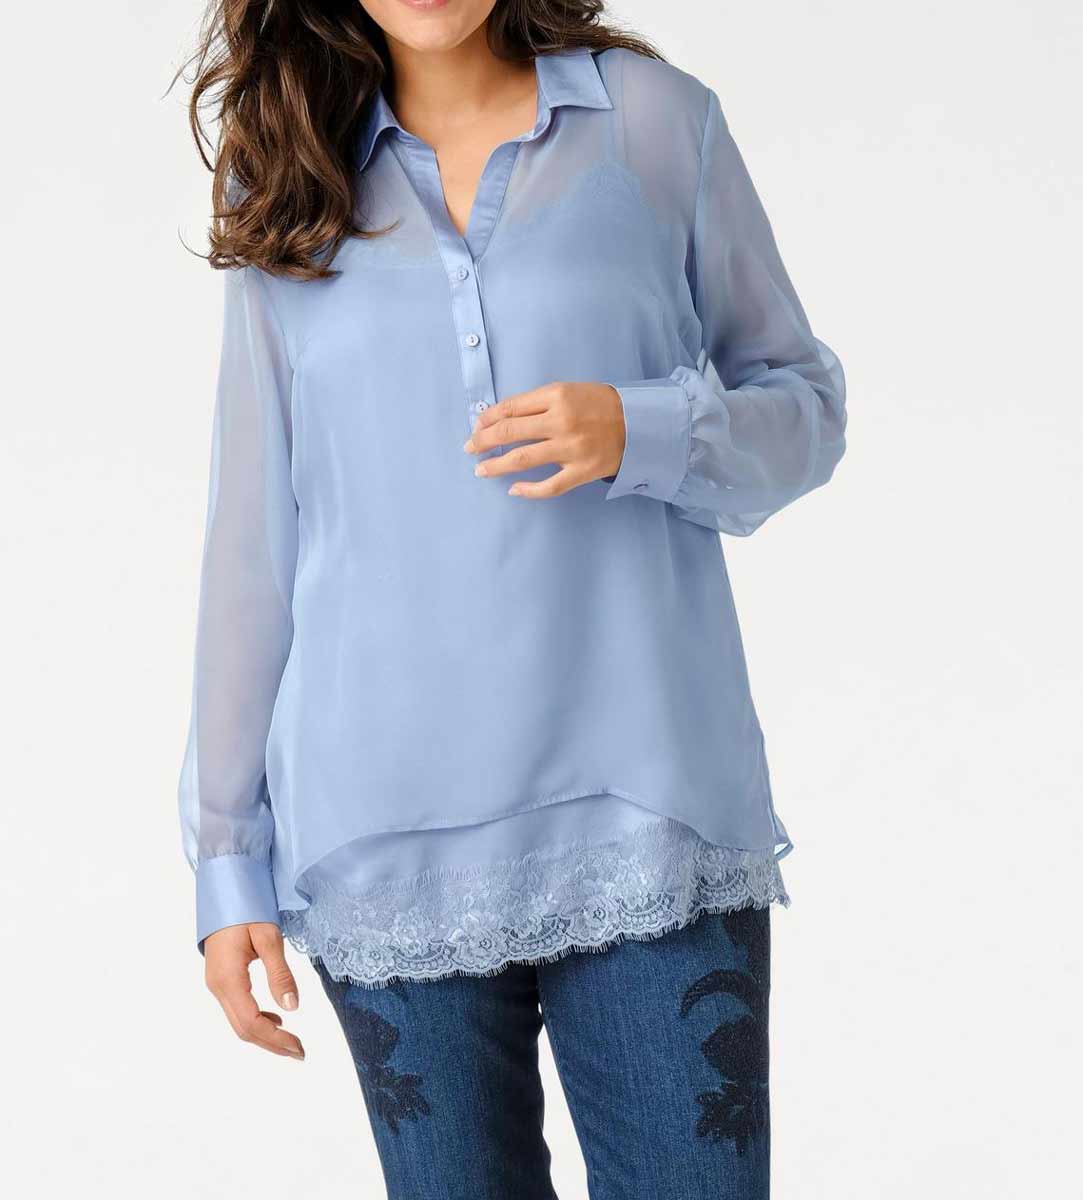 Ashley Brooke Damen Designer-Bluse+Top, hellblau